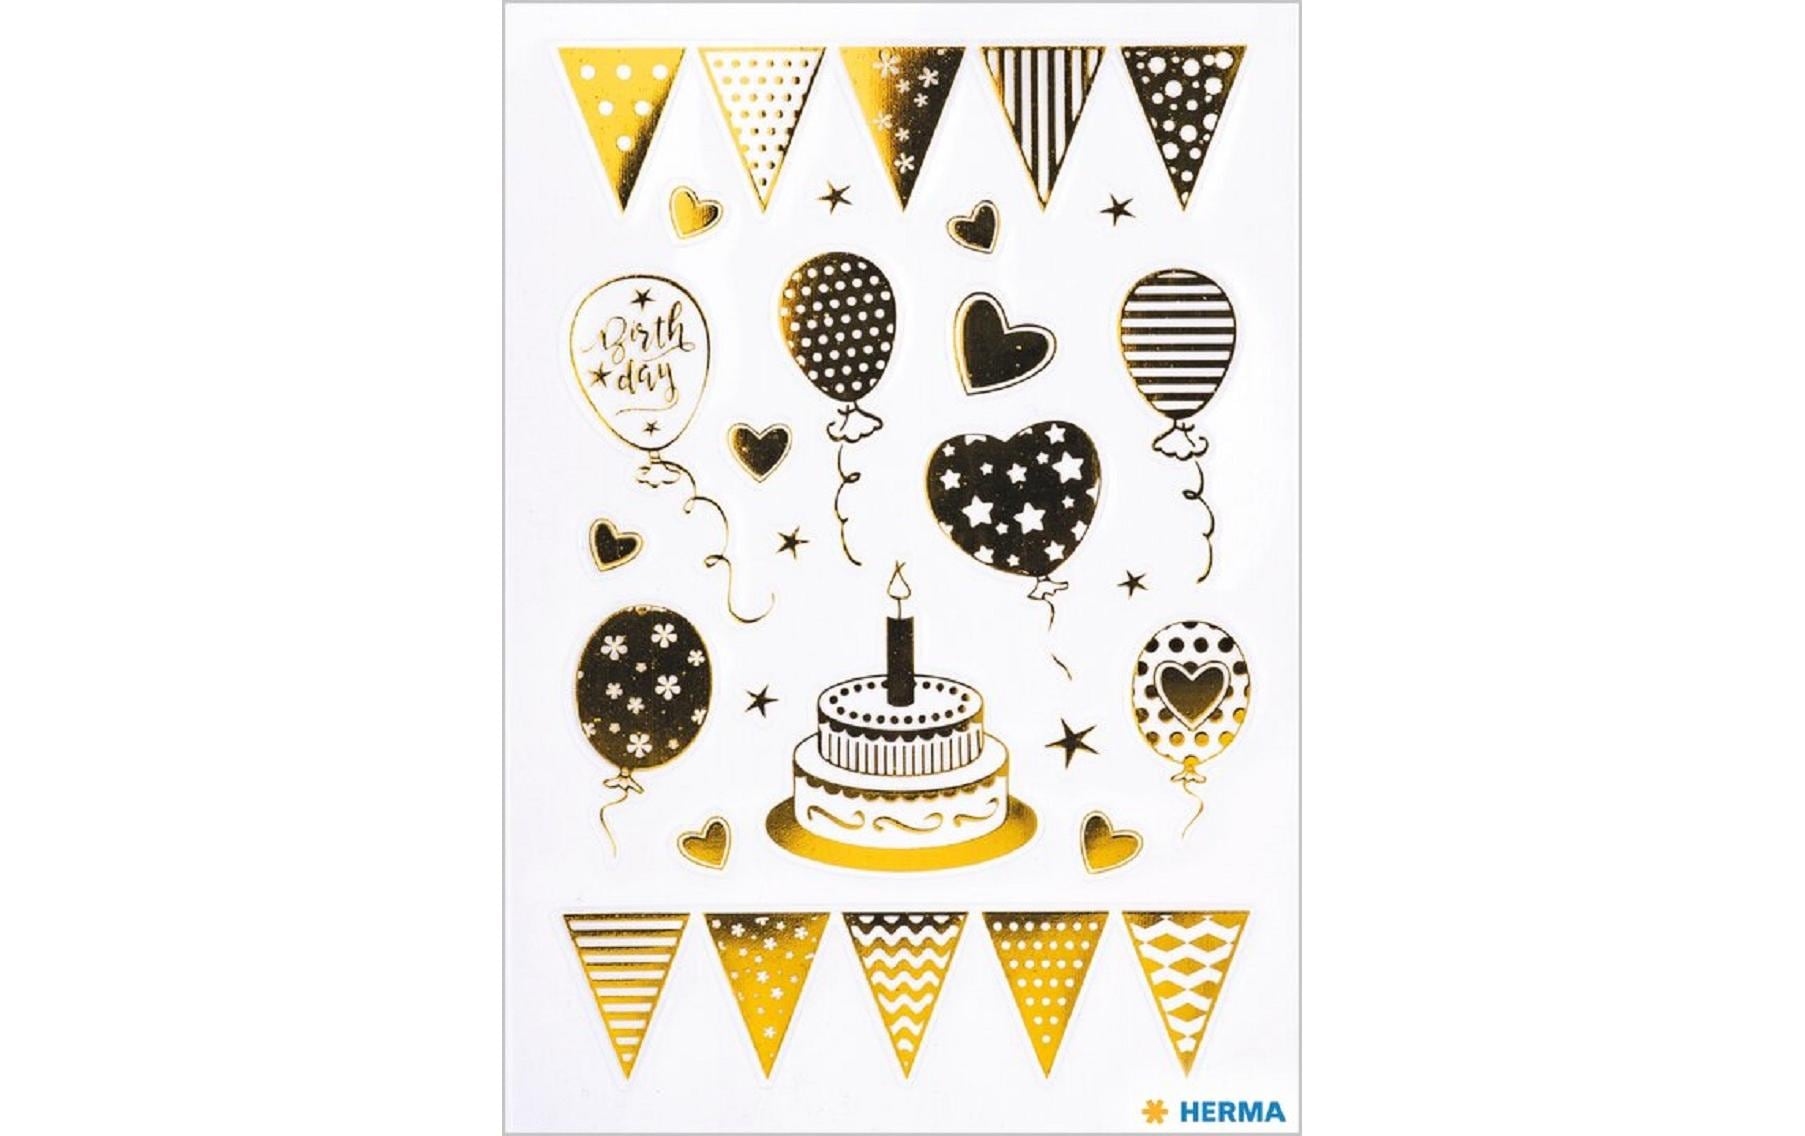 Herma Stickers Motivsticker Birthday Party Goldfolie, 1 Blatt